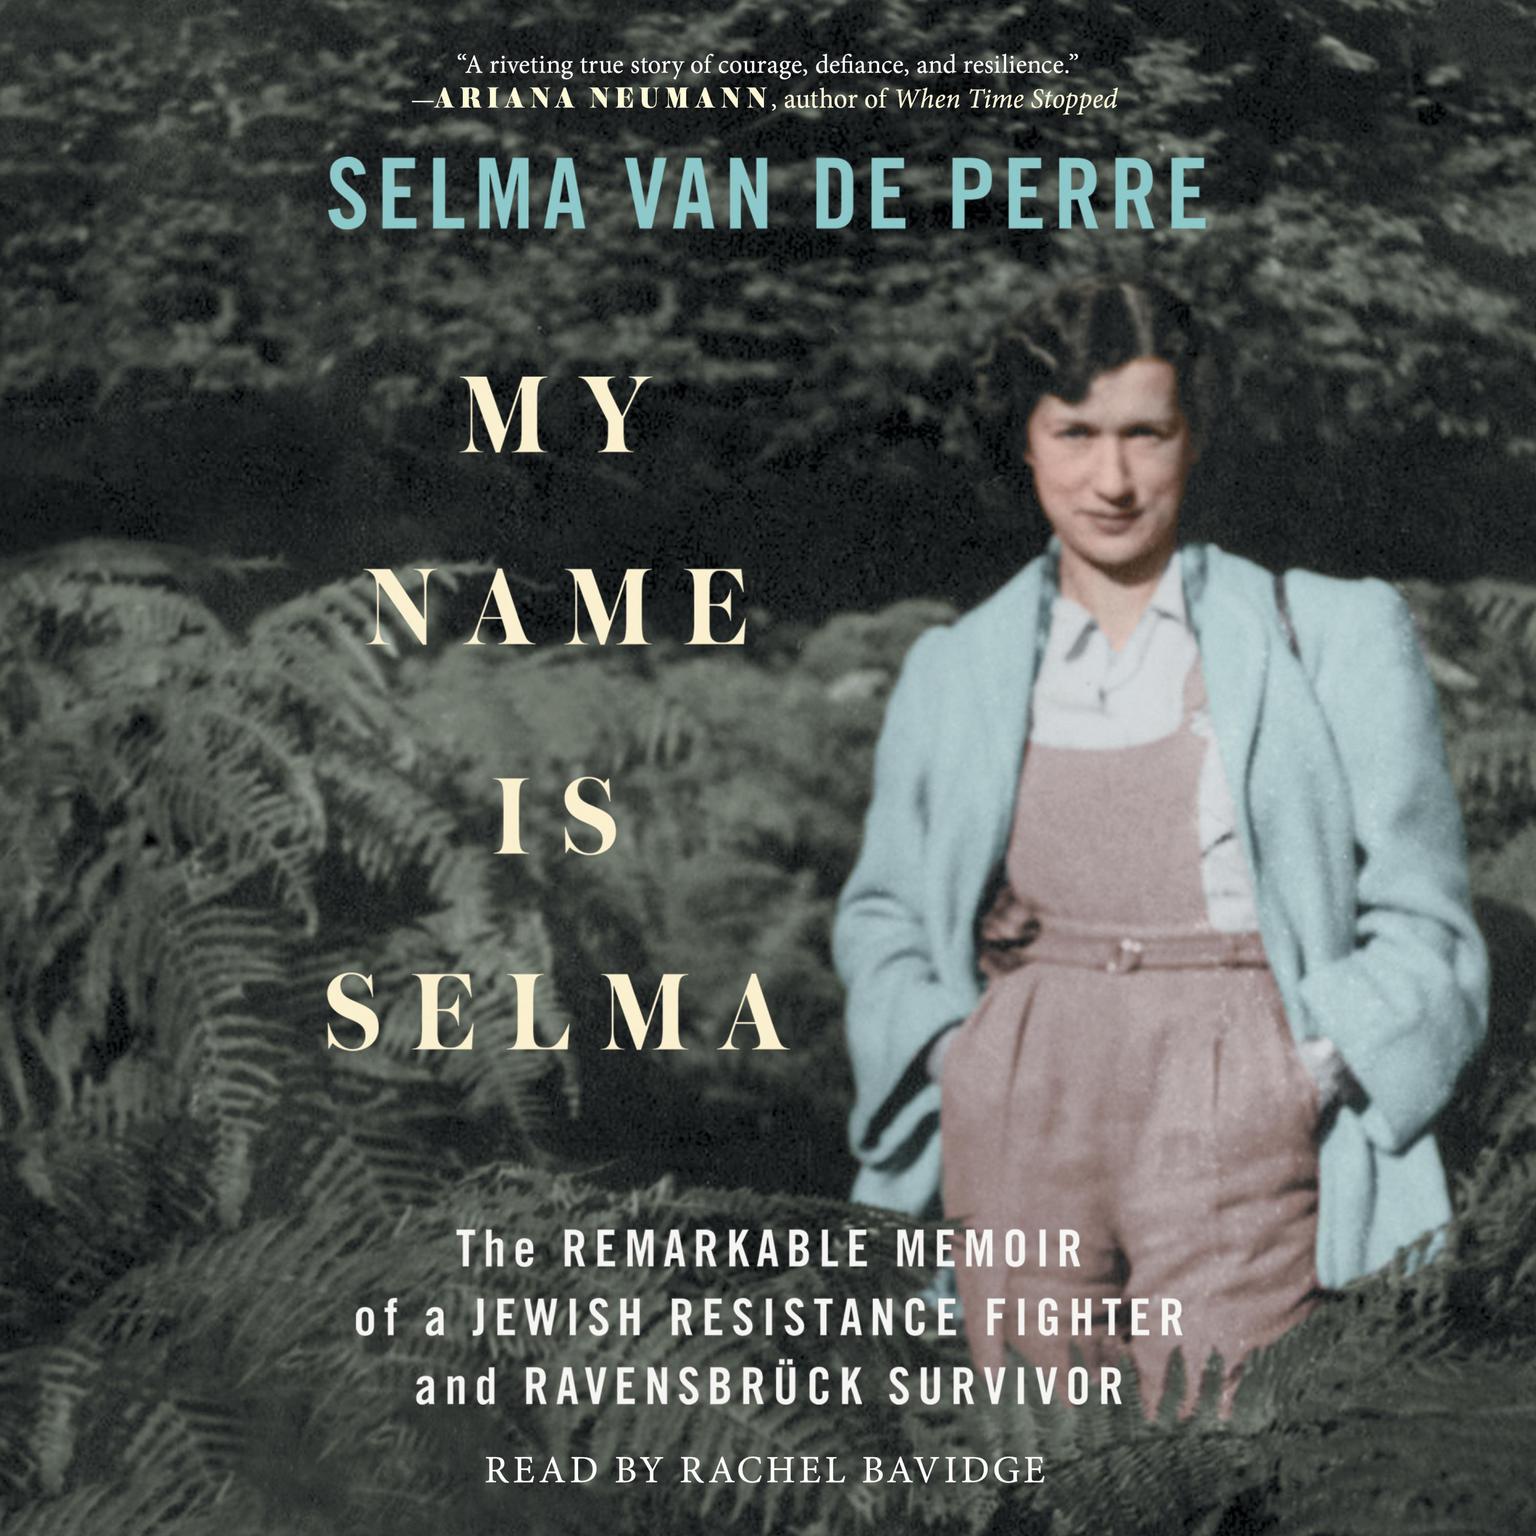 My Name Is Selma: The Remarkable Memoir of a Jewish Resistance Fighter and Ravensbrück Survivor Audiobook, by Selma van de Perre